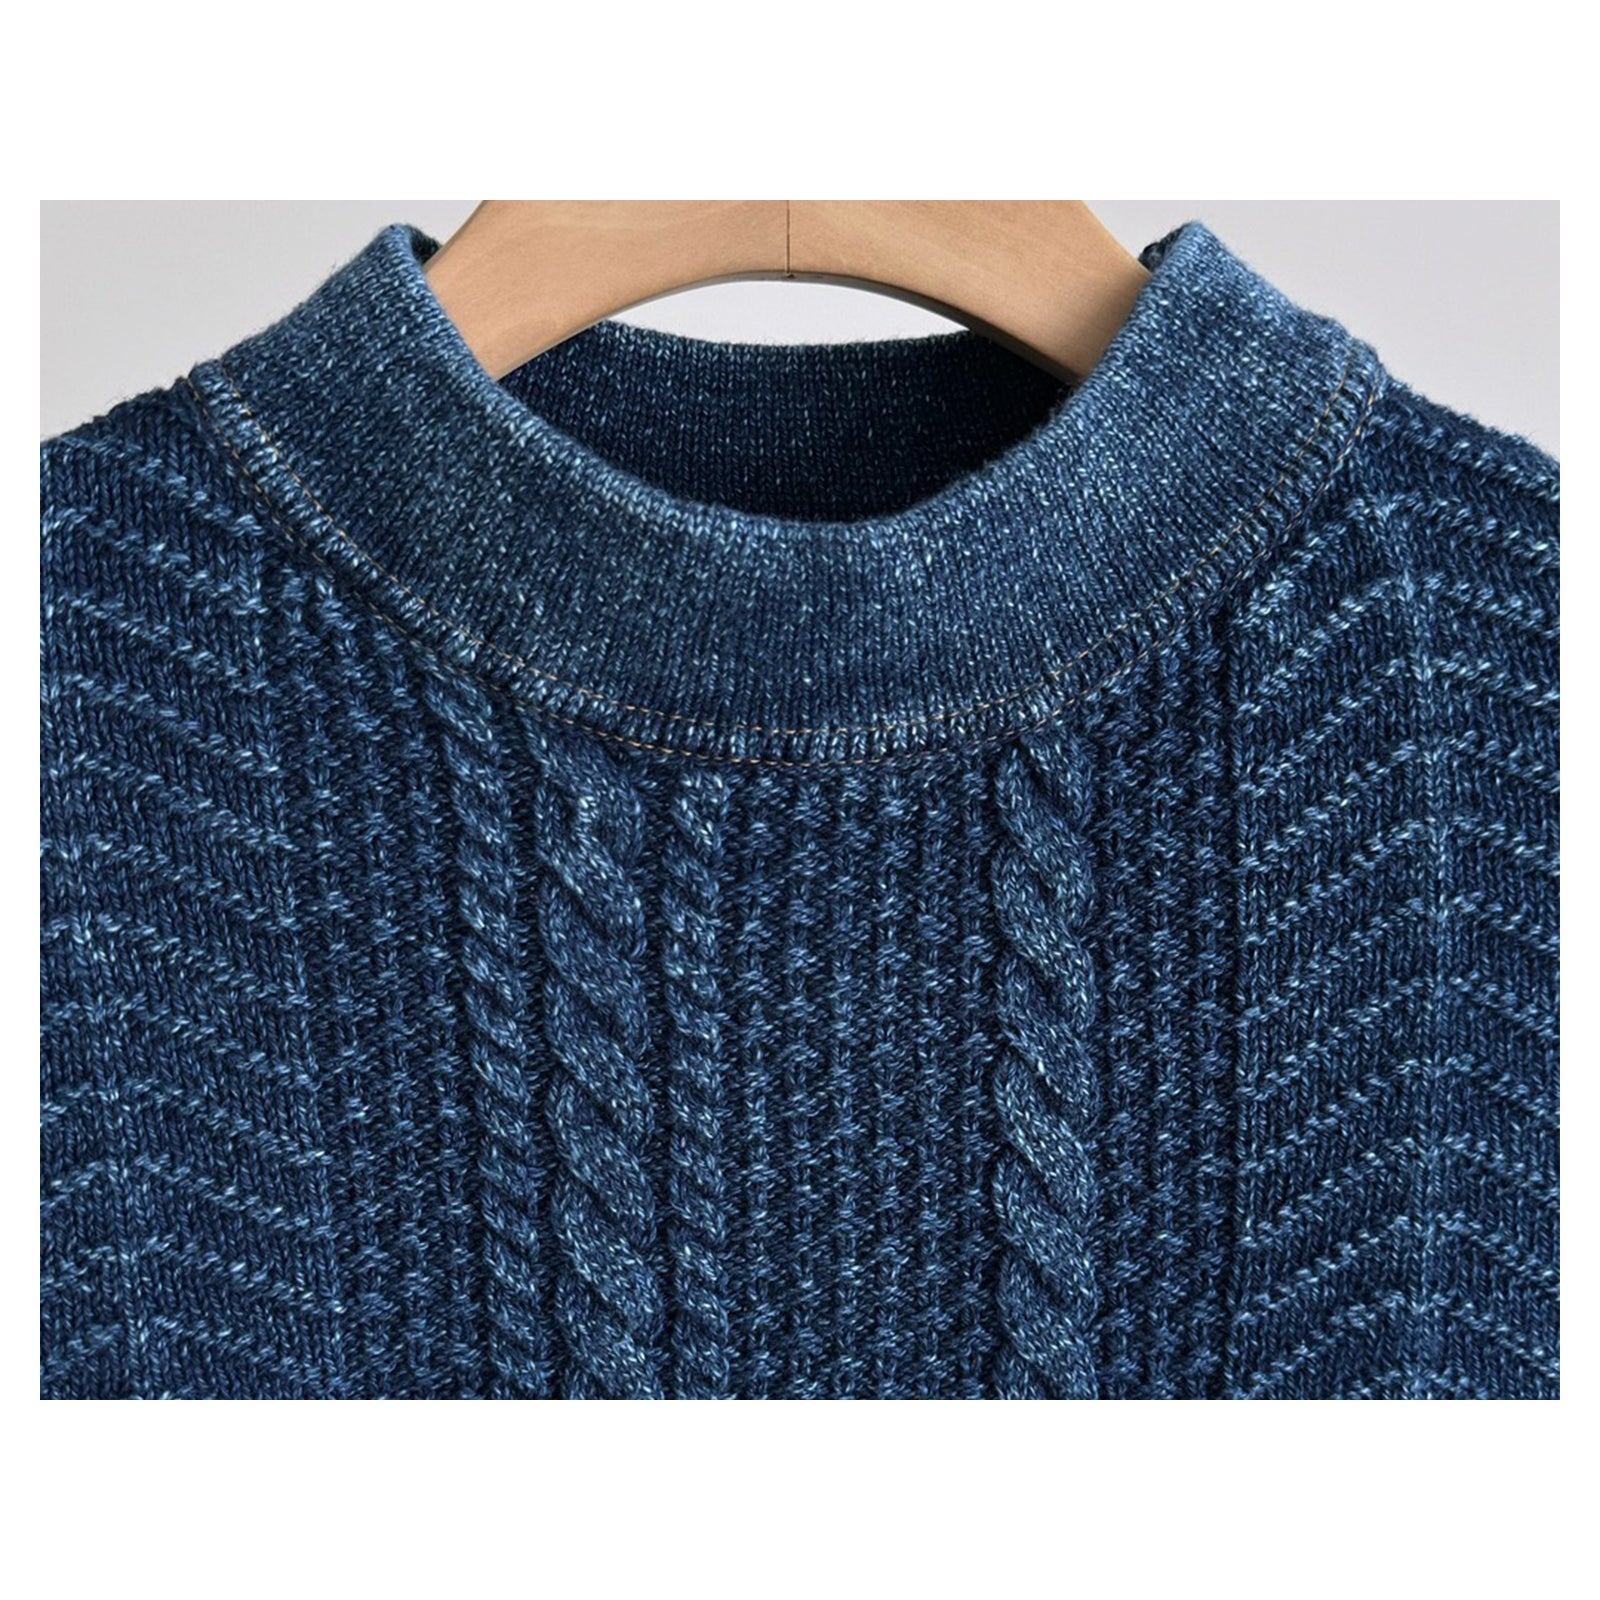 Japanese Indigo Plant Dyed Cable Knit Sweater